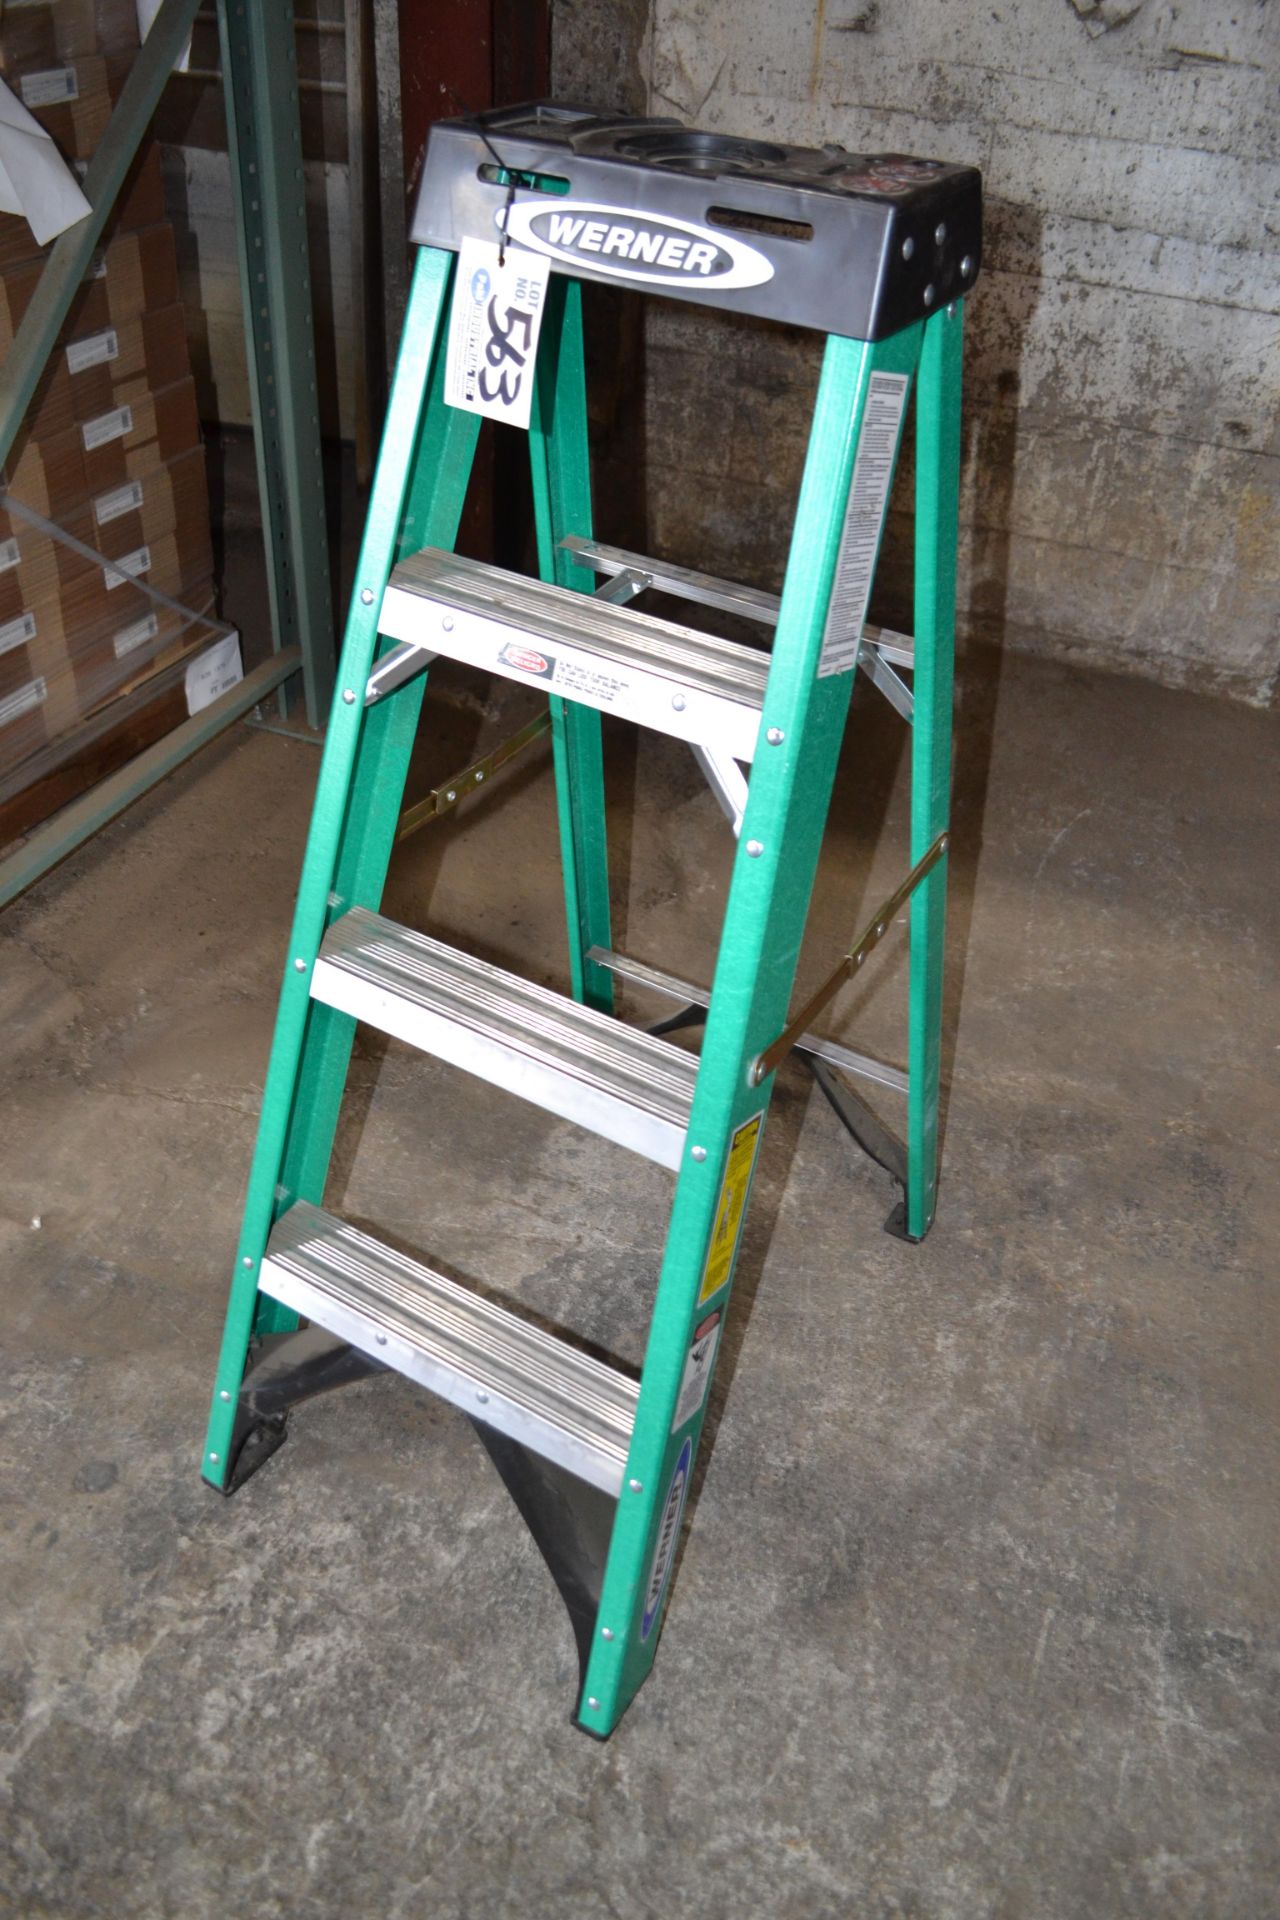 Werner 4' Fiberglass Step Ladder